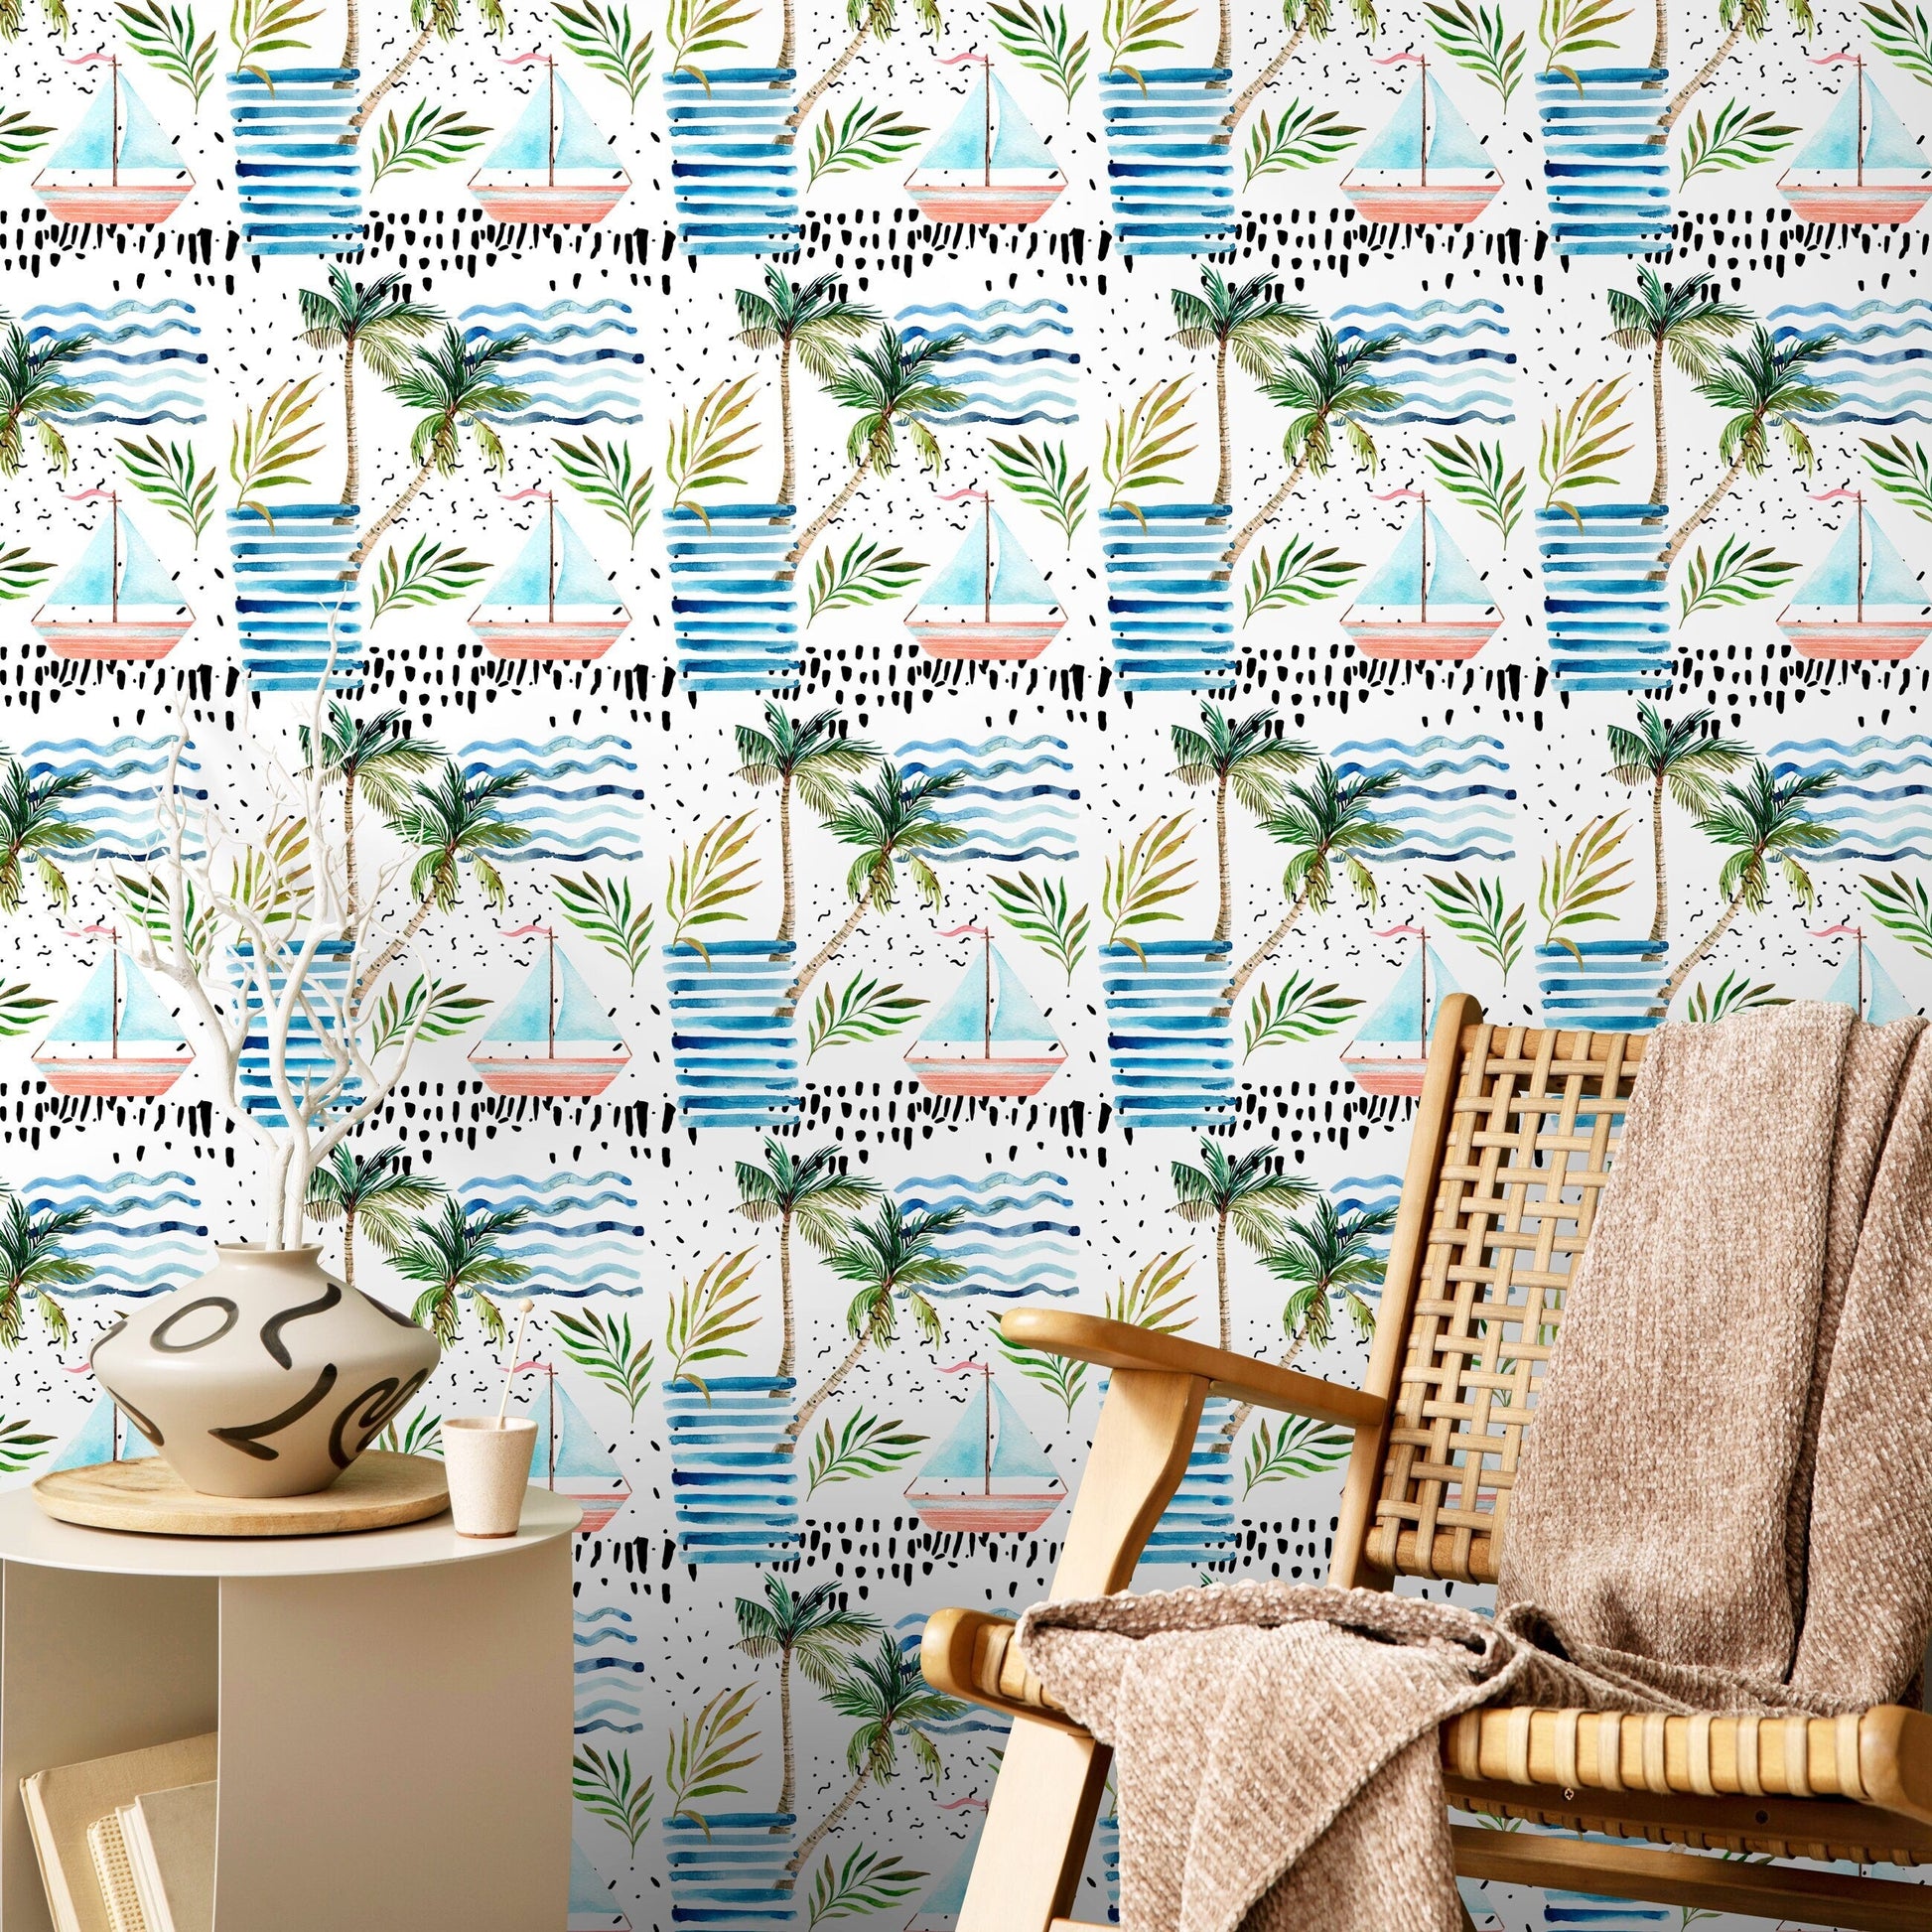 Palm Tree Wallpaper, Removable Wallpaper, Beach Wallpaper, Palm Leaves, Tropical Wall Decor, Jungle Wallpaper - A185